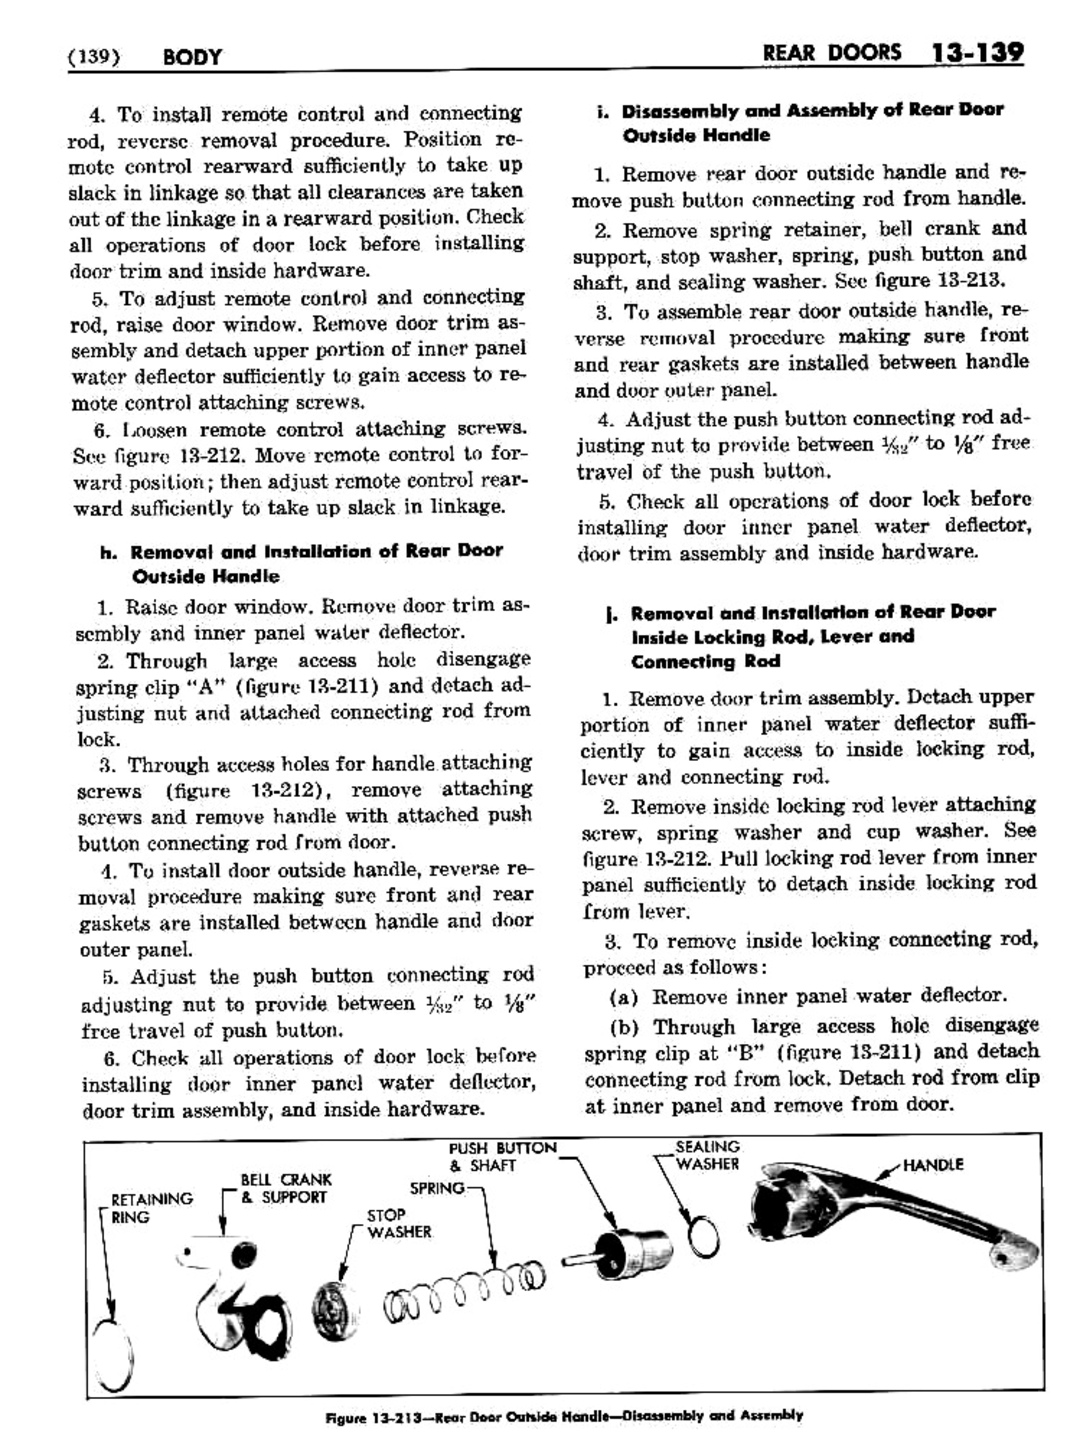 n_1957 Buick Body Service Manual-141-141.jpg